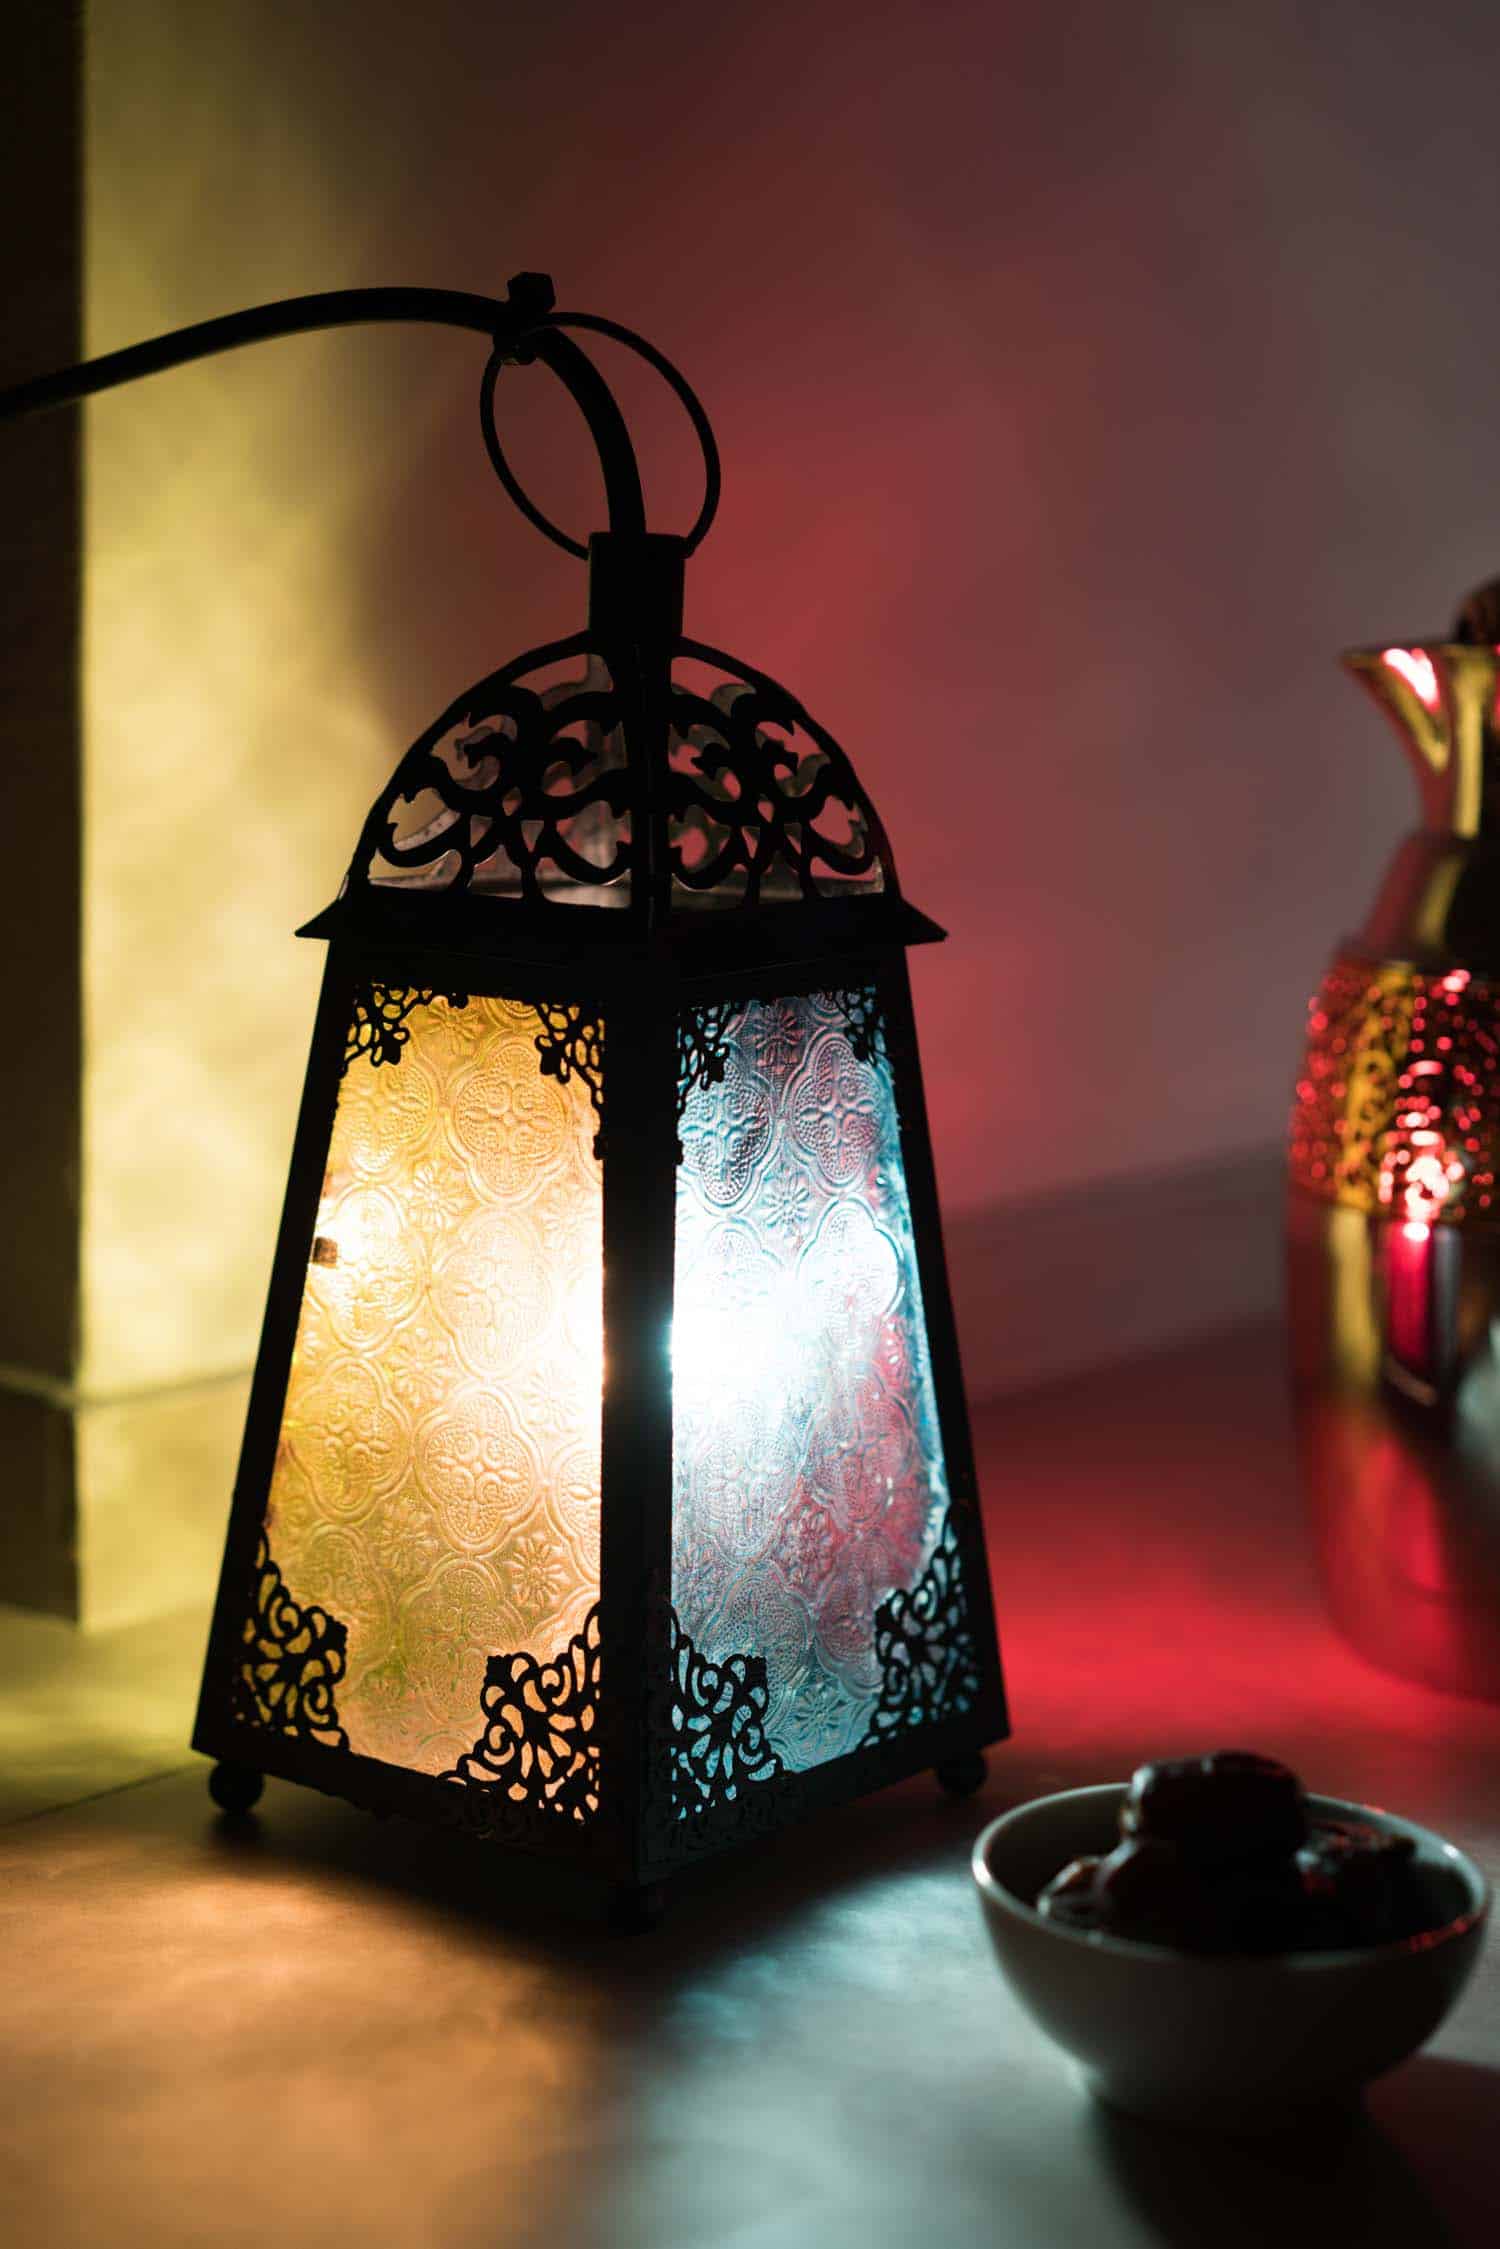 Ramadan lanterns, with nice color